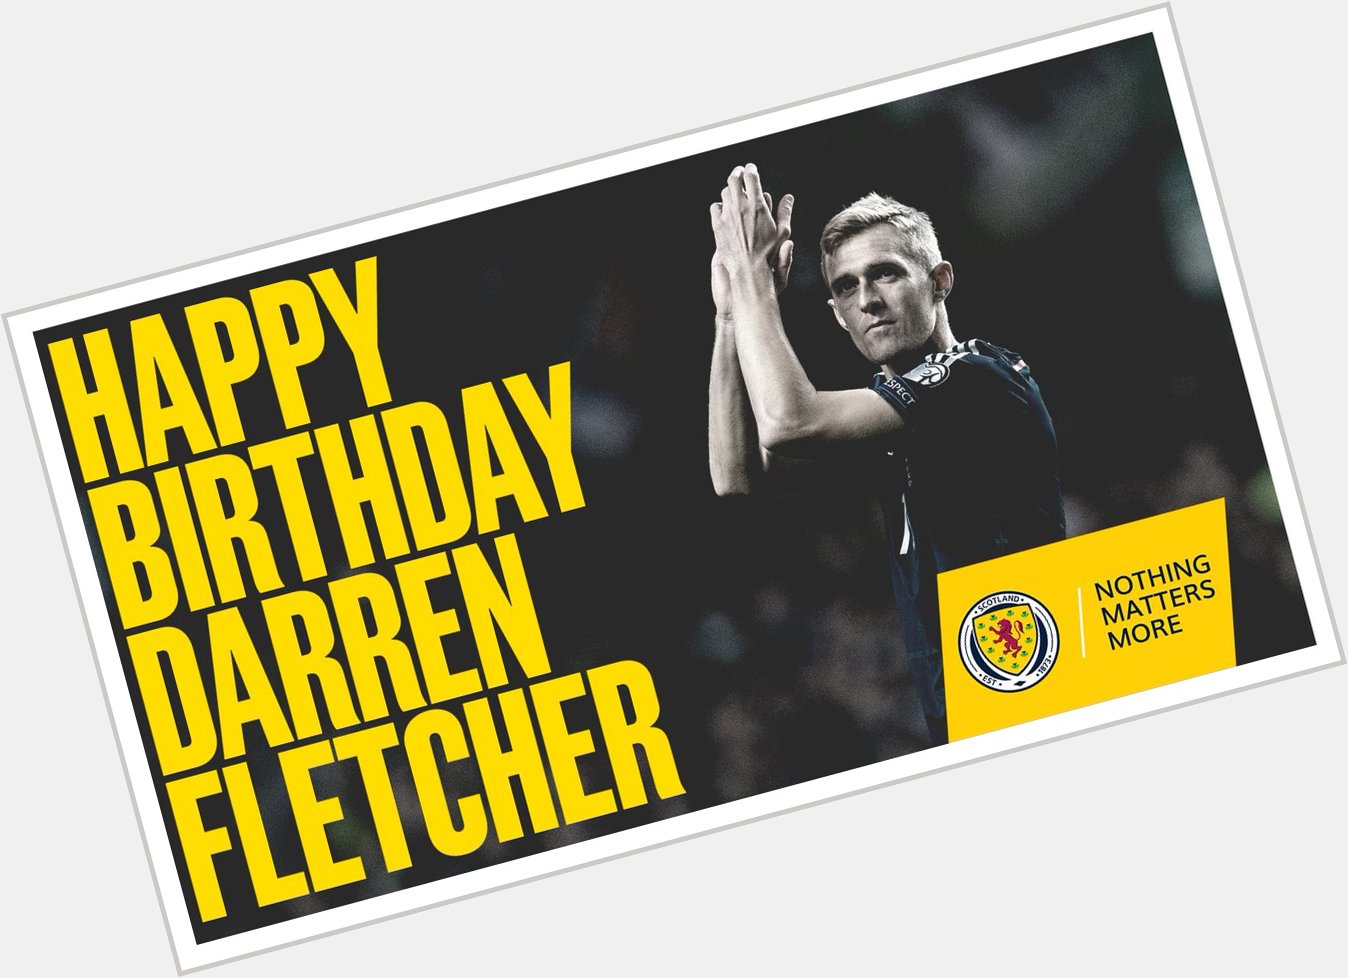  | Wishing a Happy Birthday to Darren Fletcher        